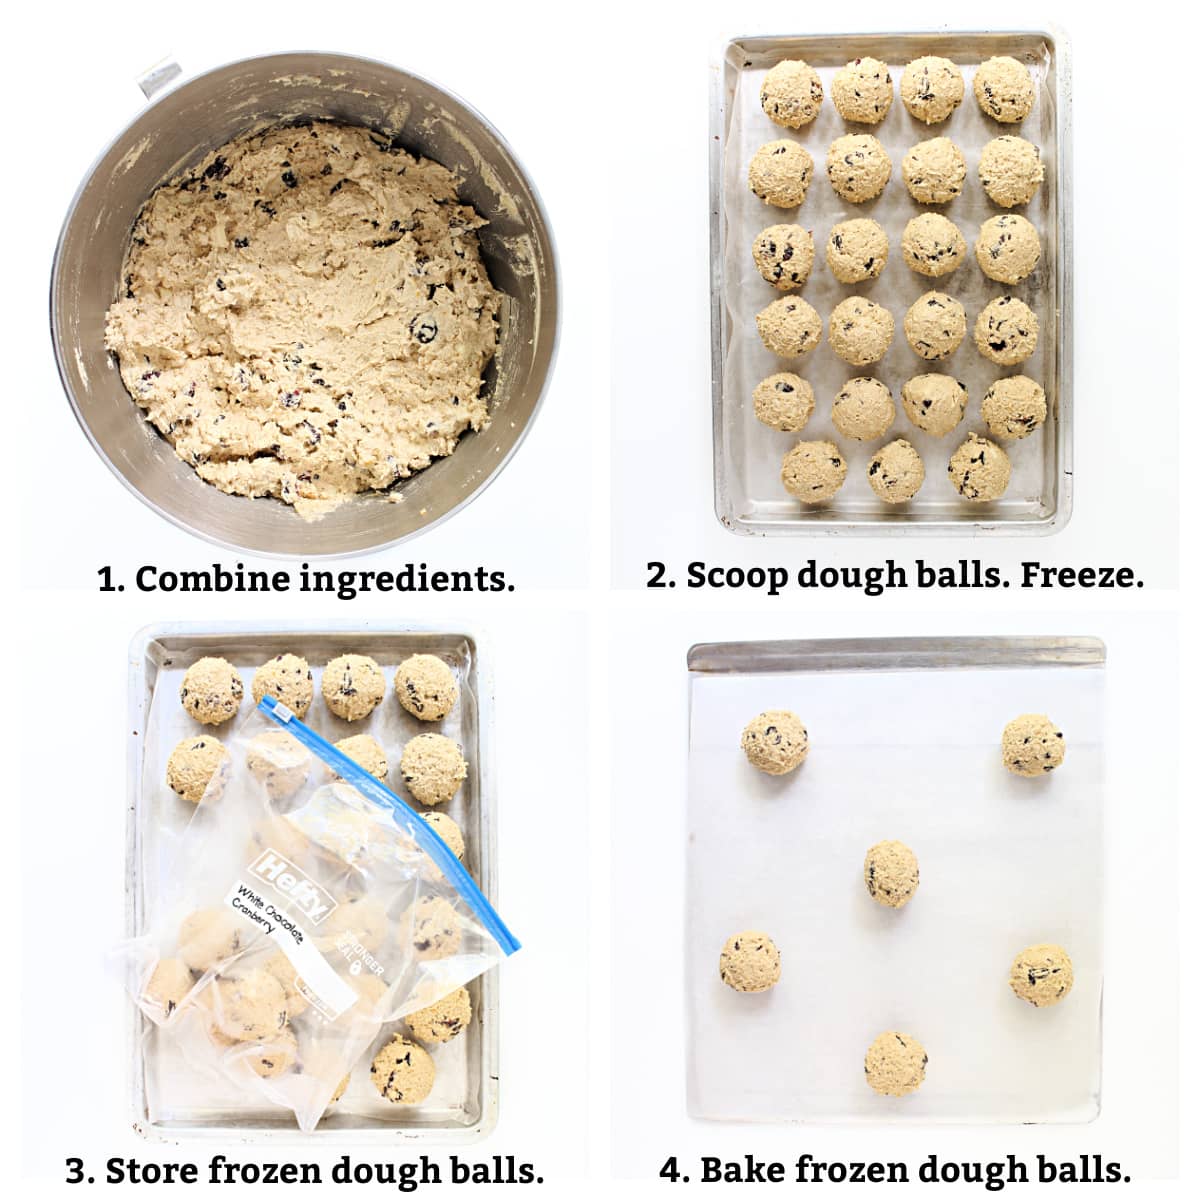 Instructions labeled; combine ingredients, scoop dough balls, freeze, store or bake frozen dough balls.